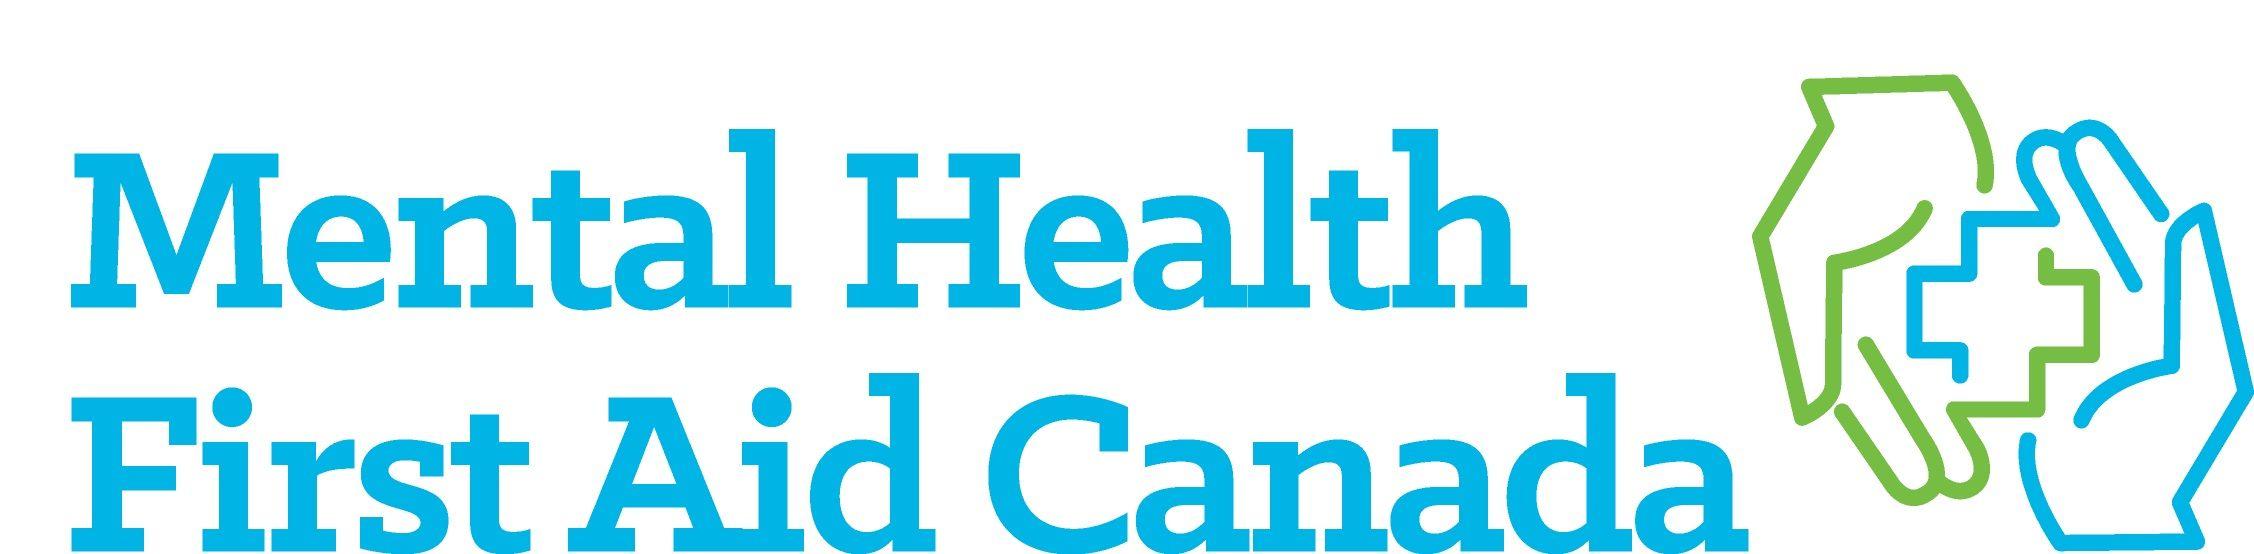 Mental Health First Aid Logo - Catalyst 2017 Mental Health First Aid Course